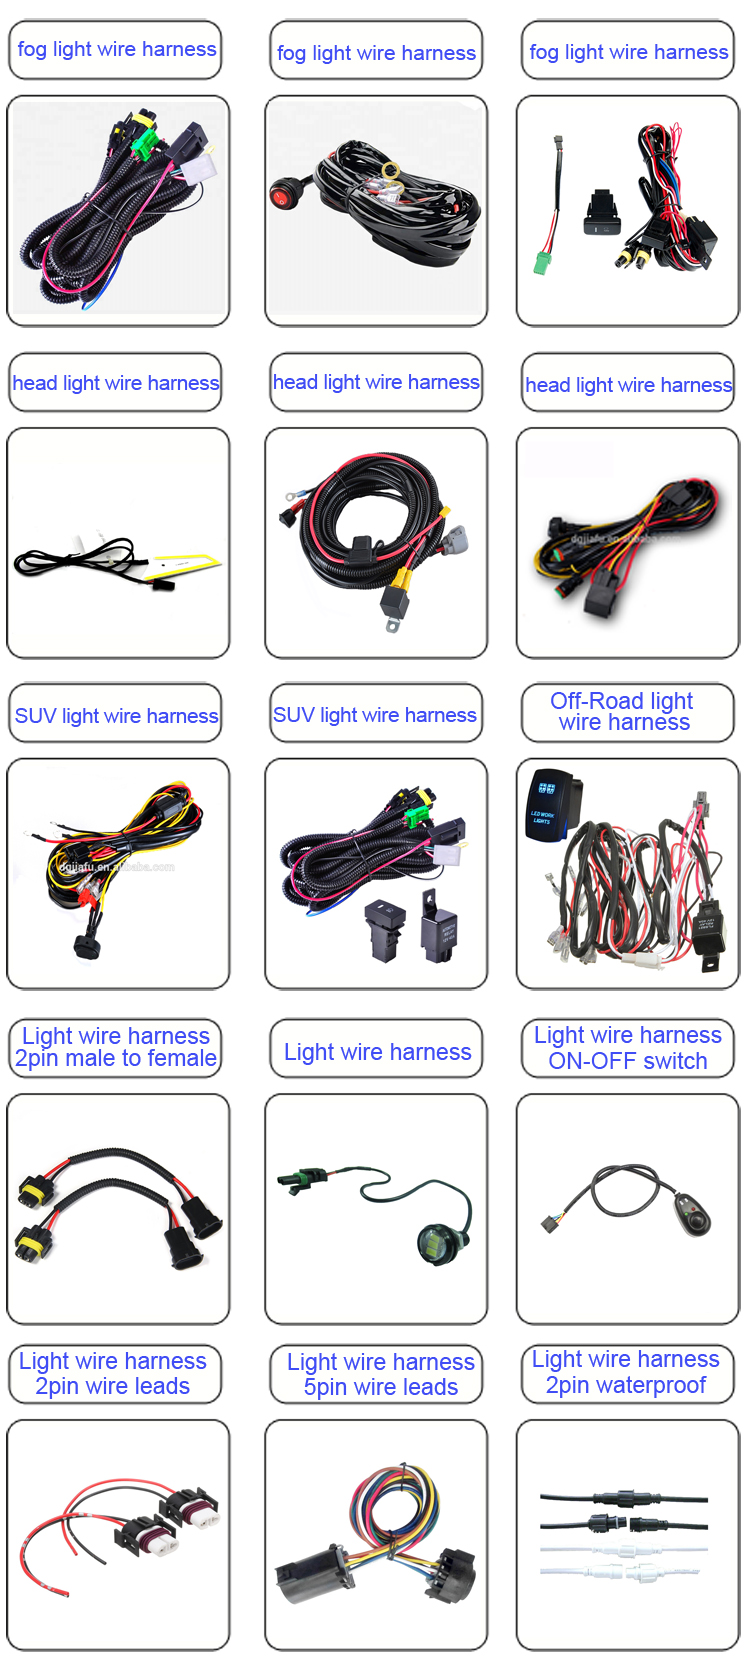 light wire harness